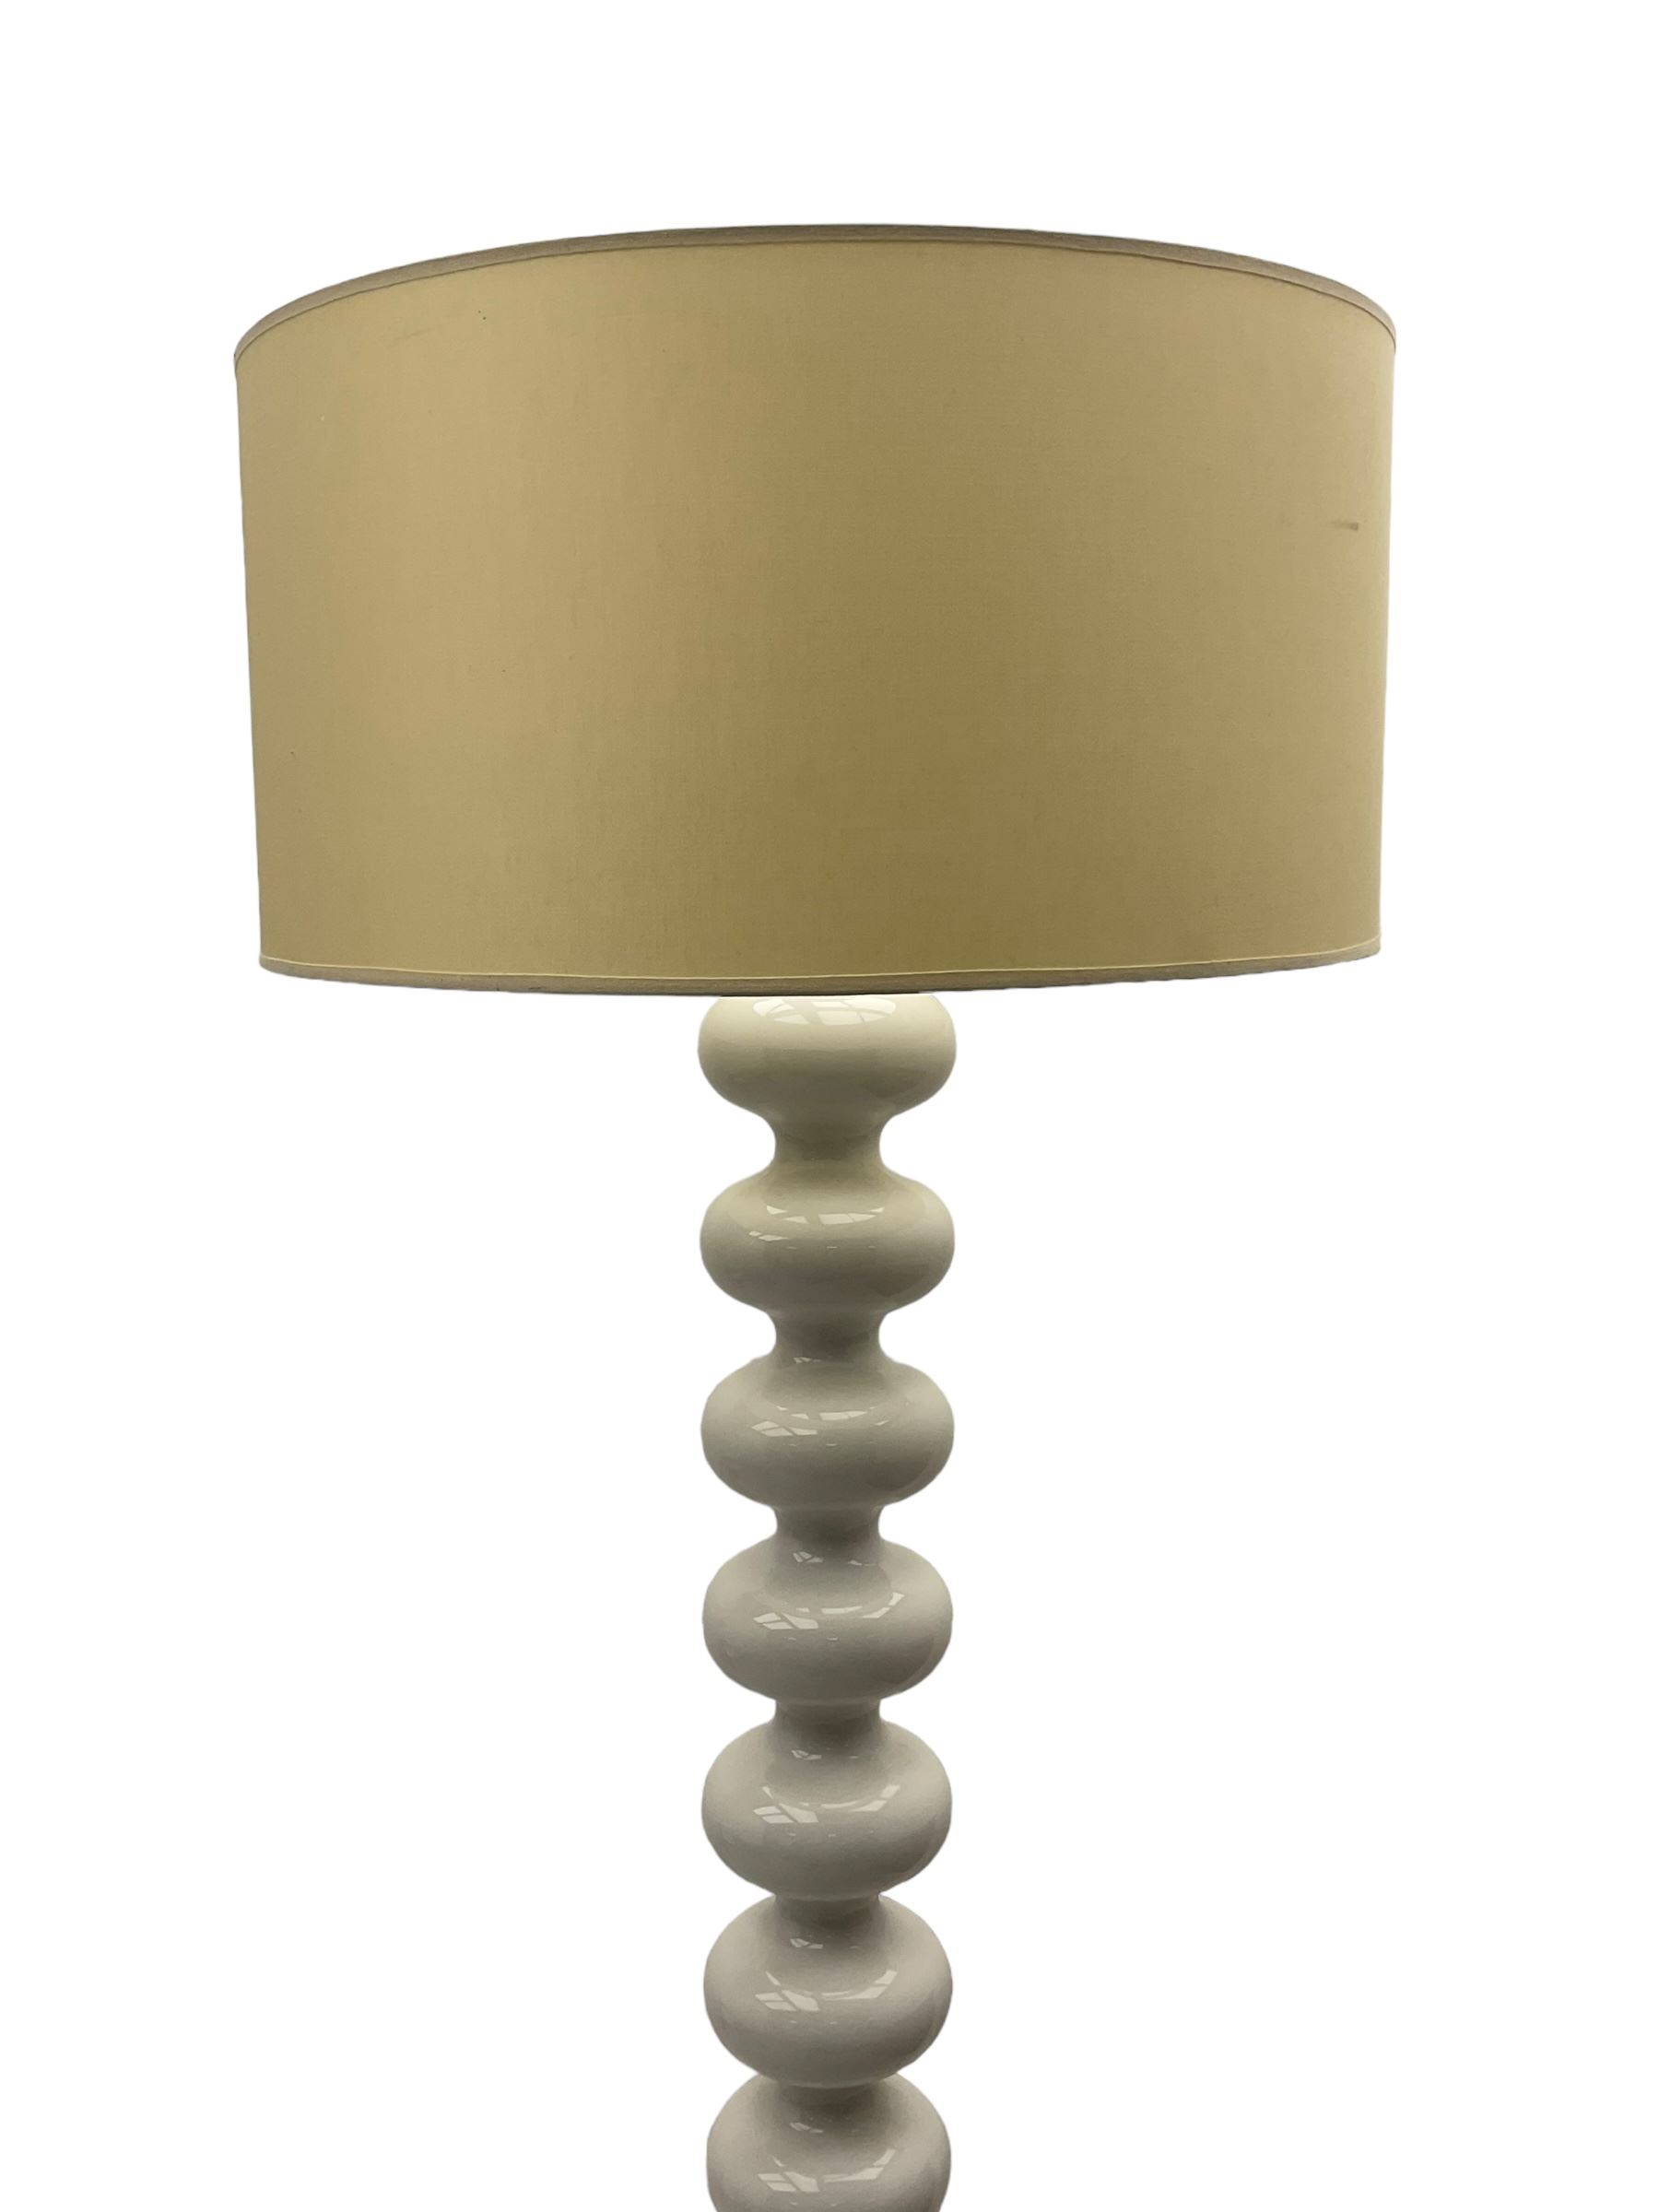 Italian white acrylic bobbin standard lamp - Image 6 of 8